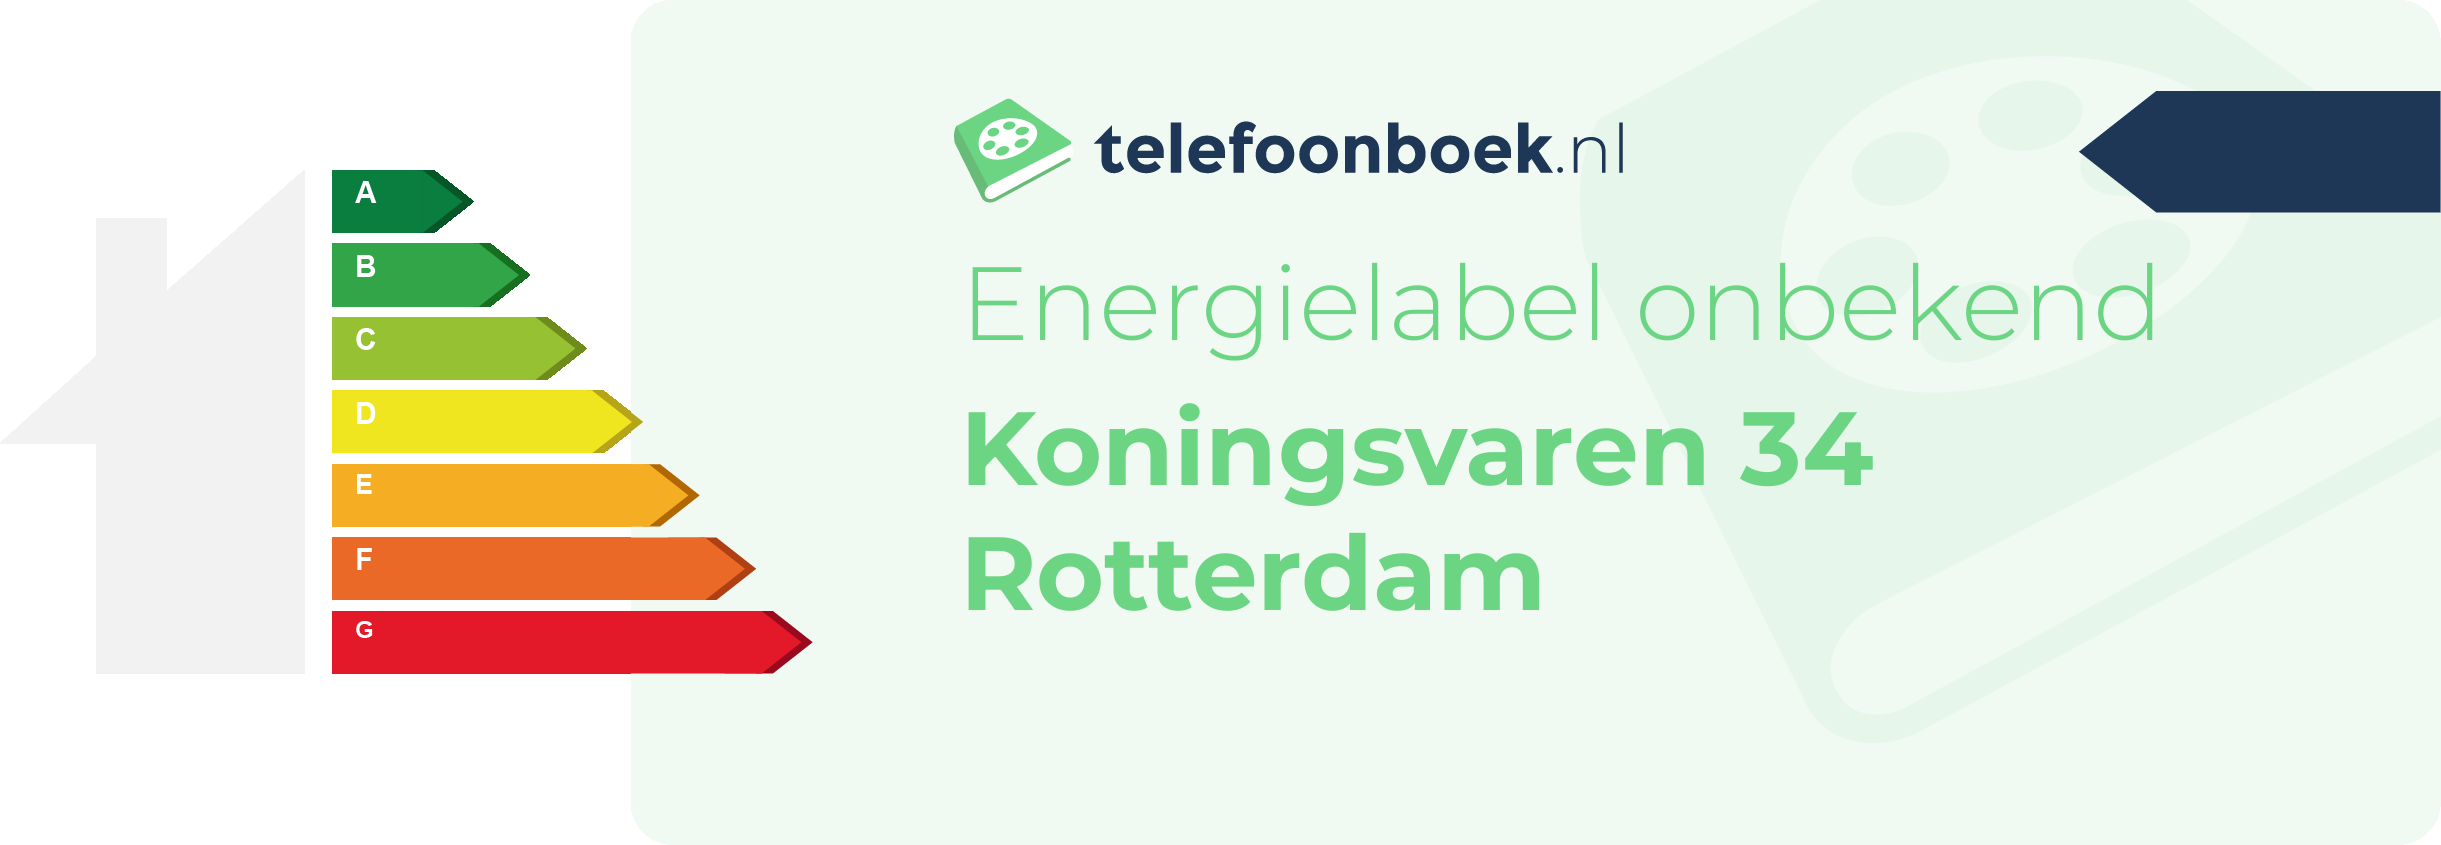 Energielabel Koningsvaren 34 Rotterdam